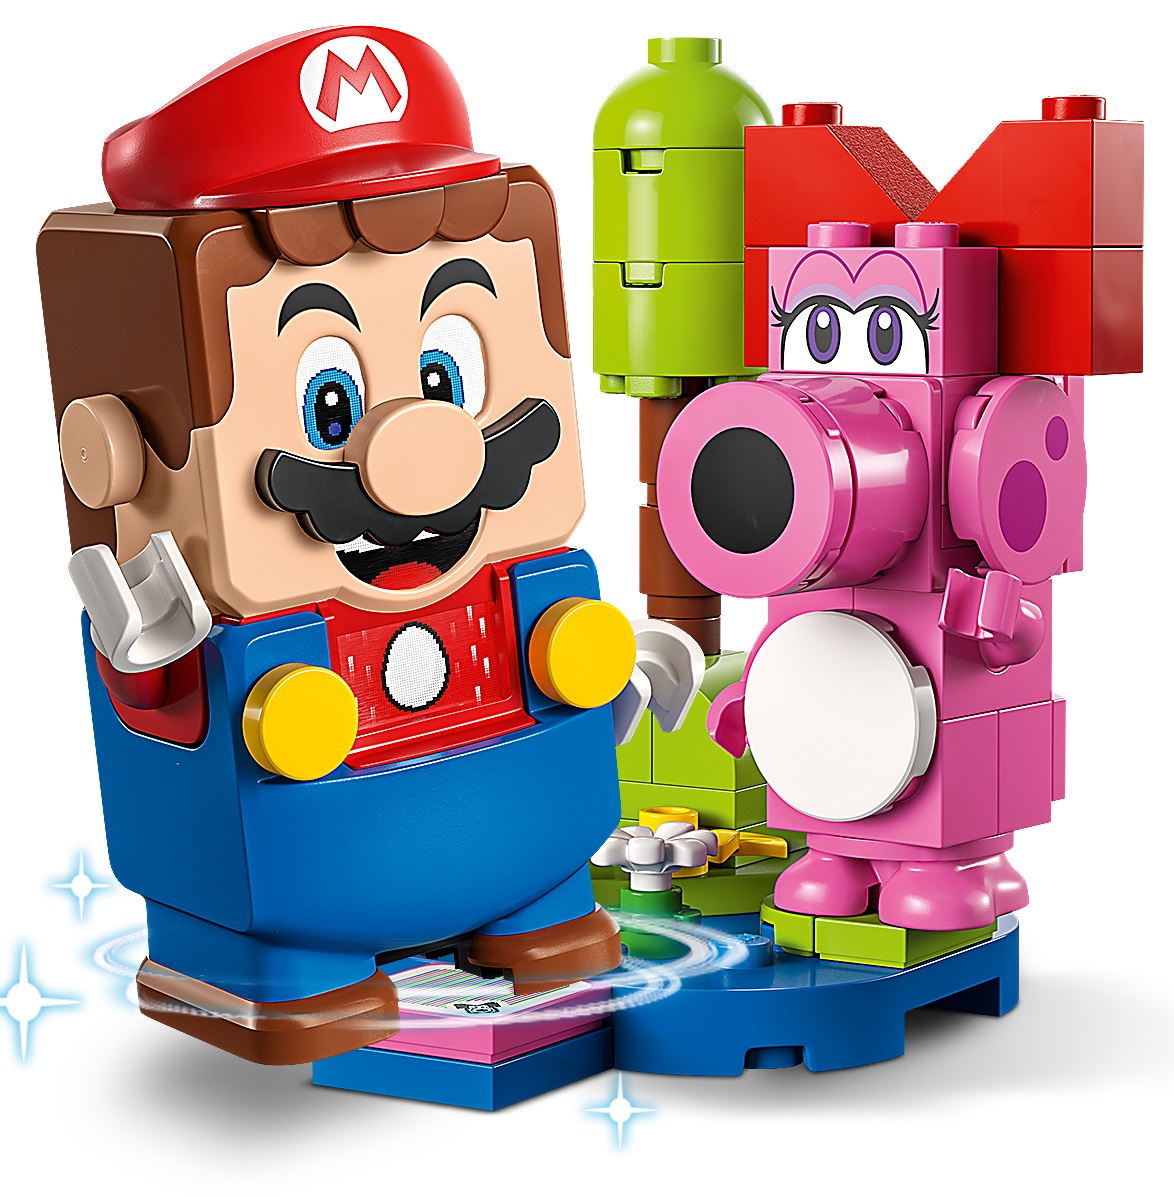 You Can Combine Mario Kart Live and Lego Super Mario